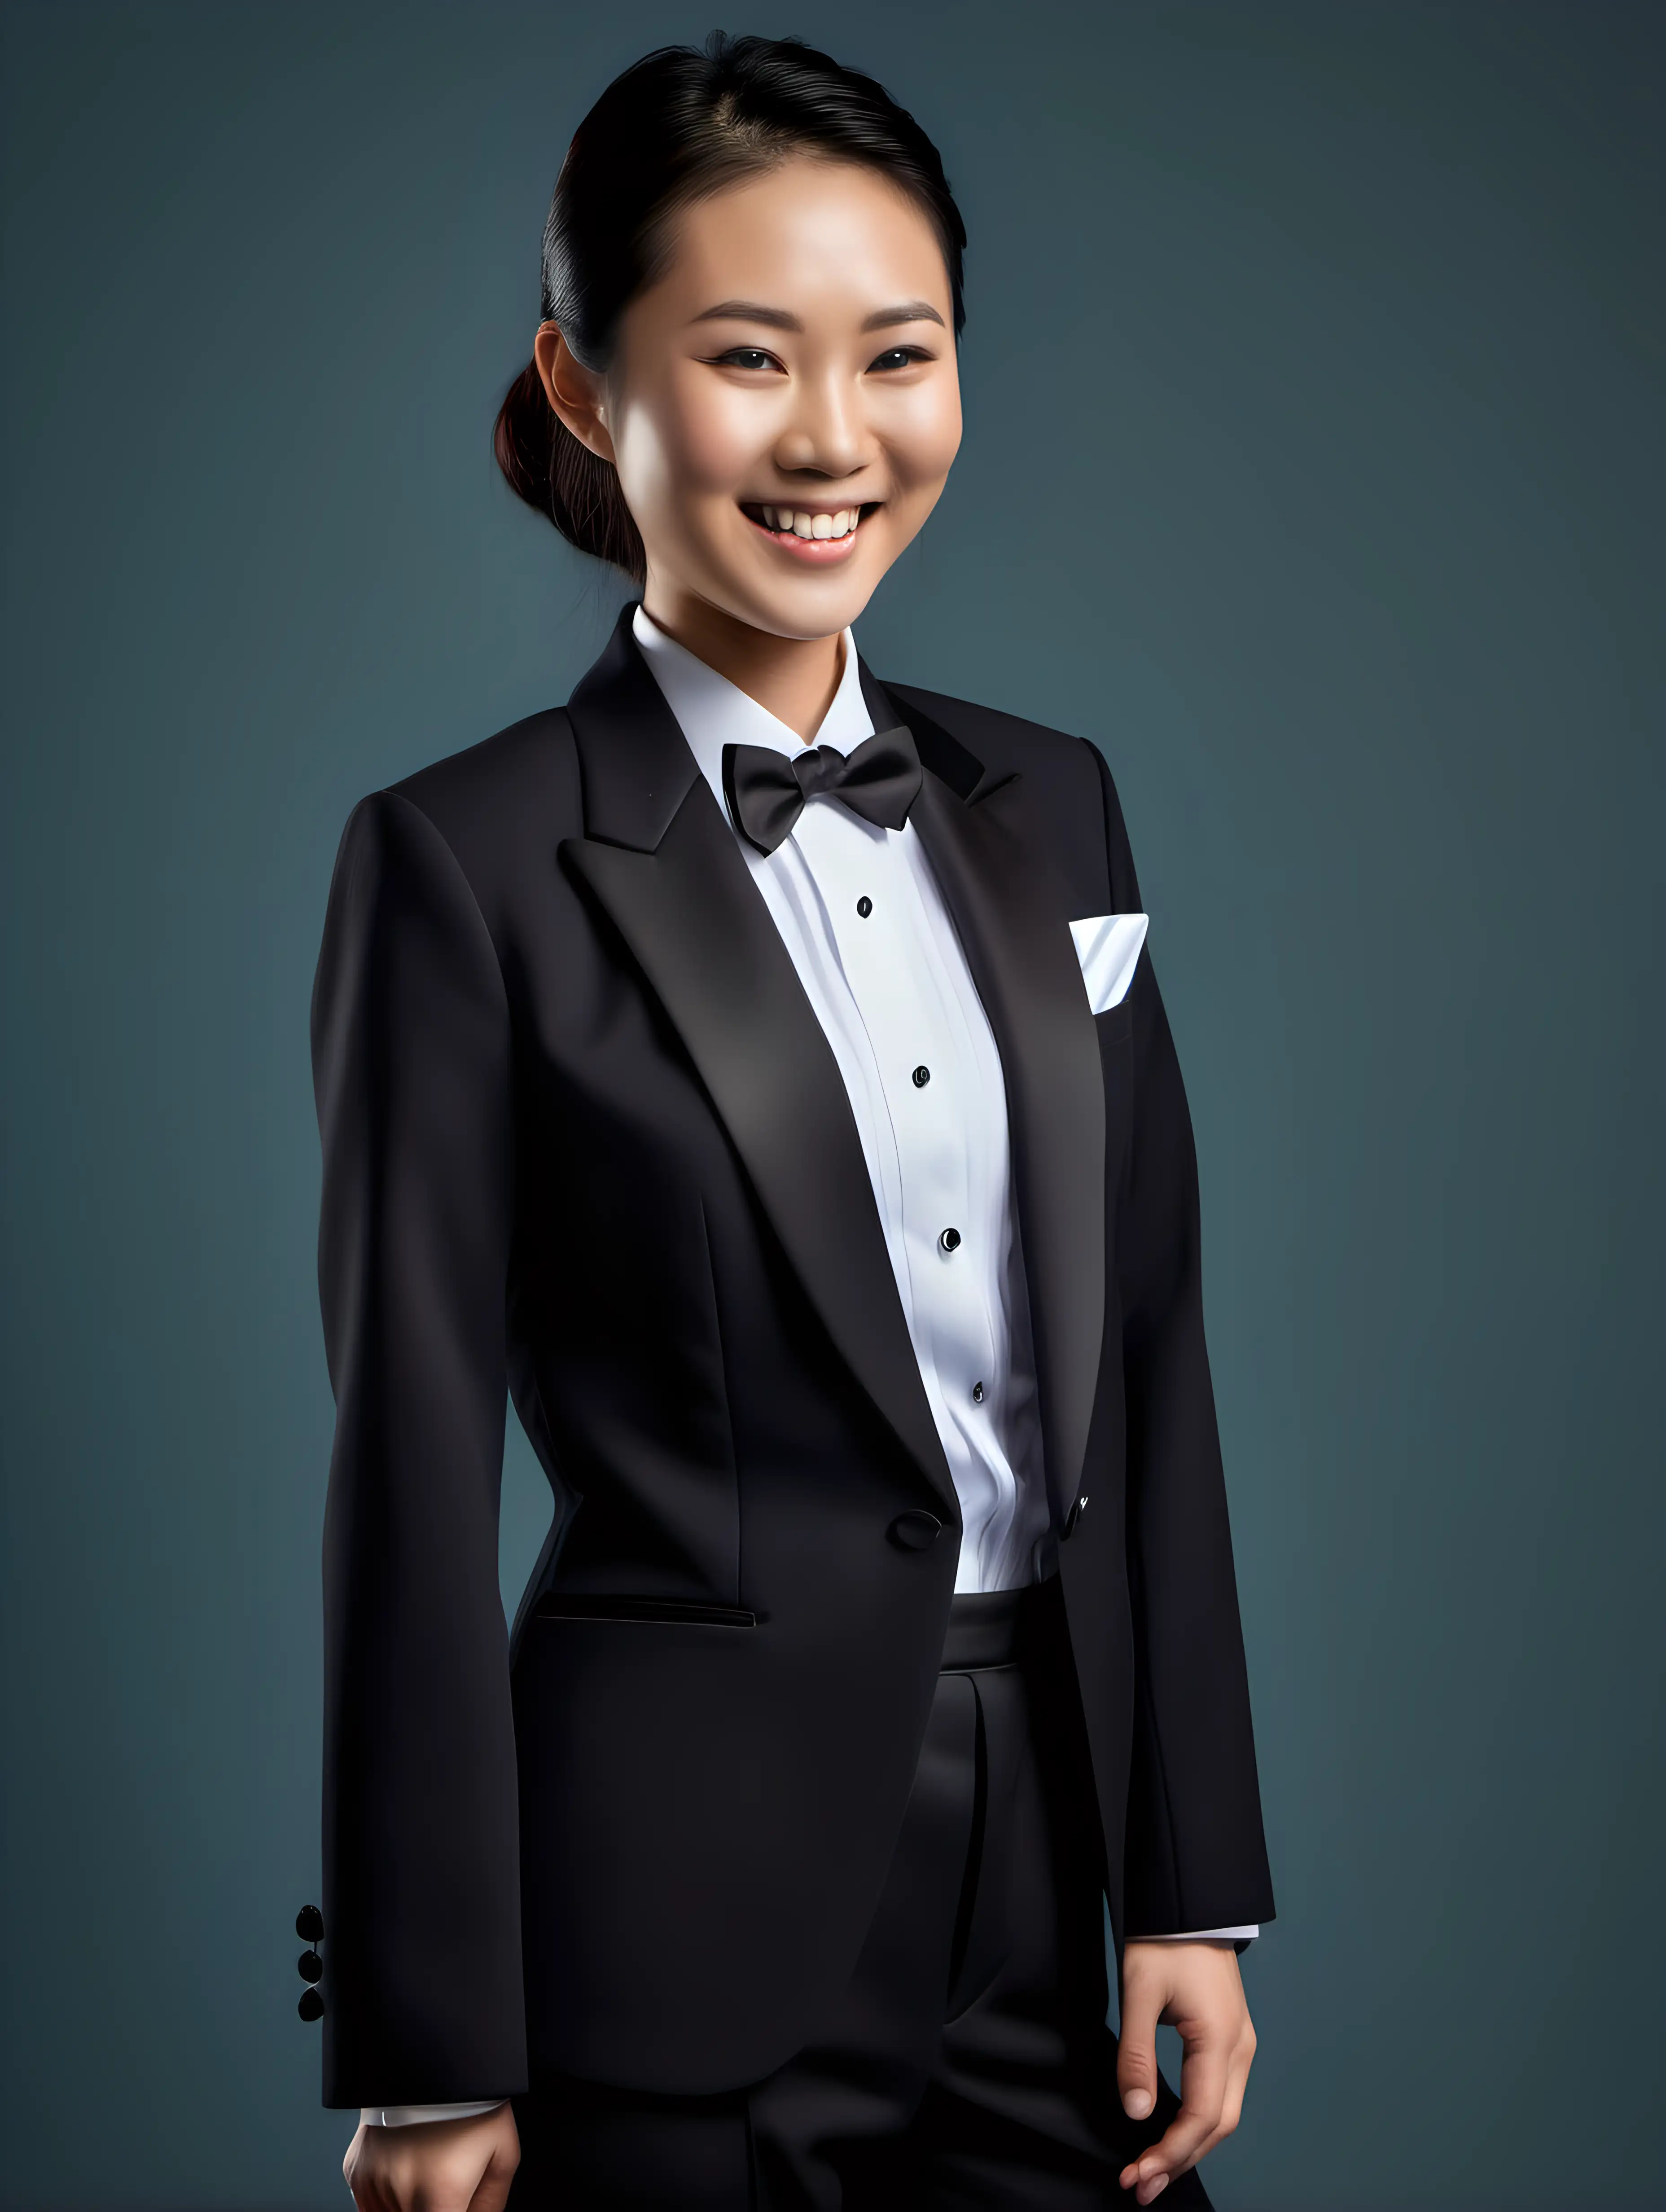 Stylish-Asian-Woman-in-Open-Tuxedo-with-Cufflinks